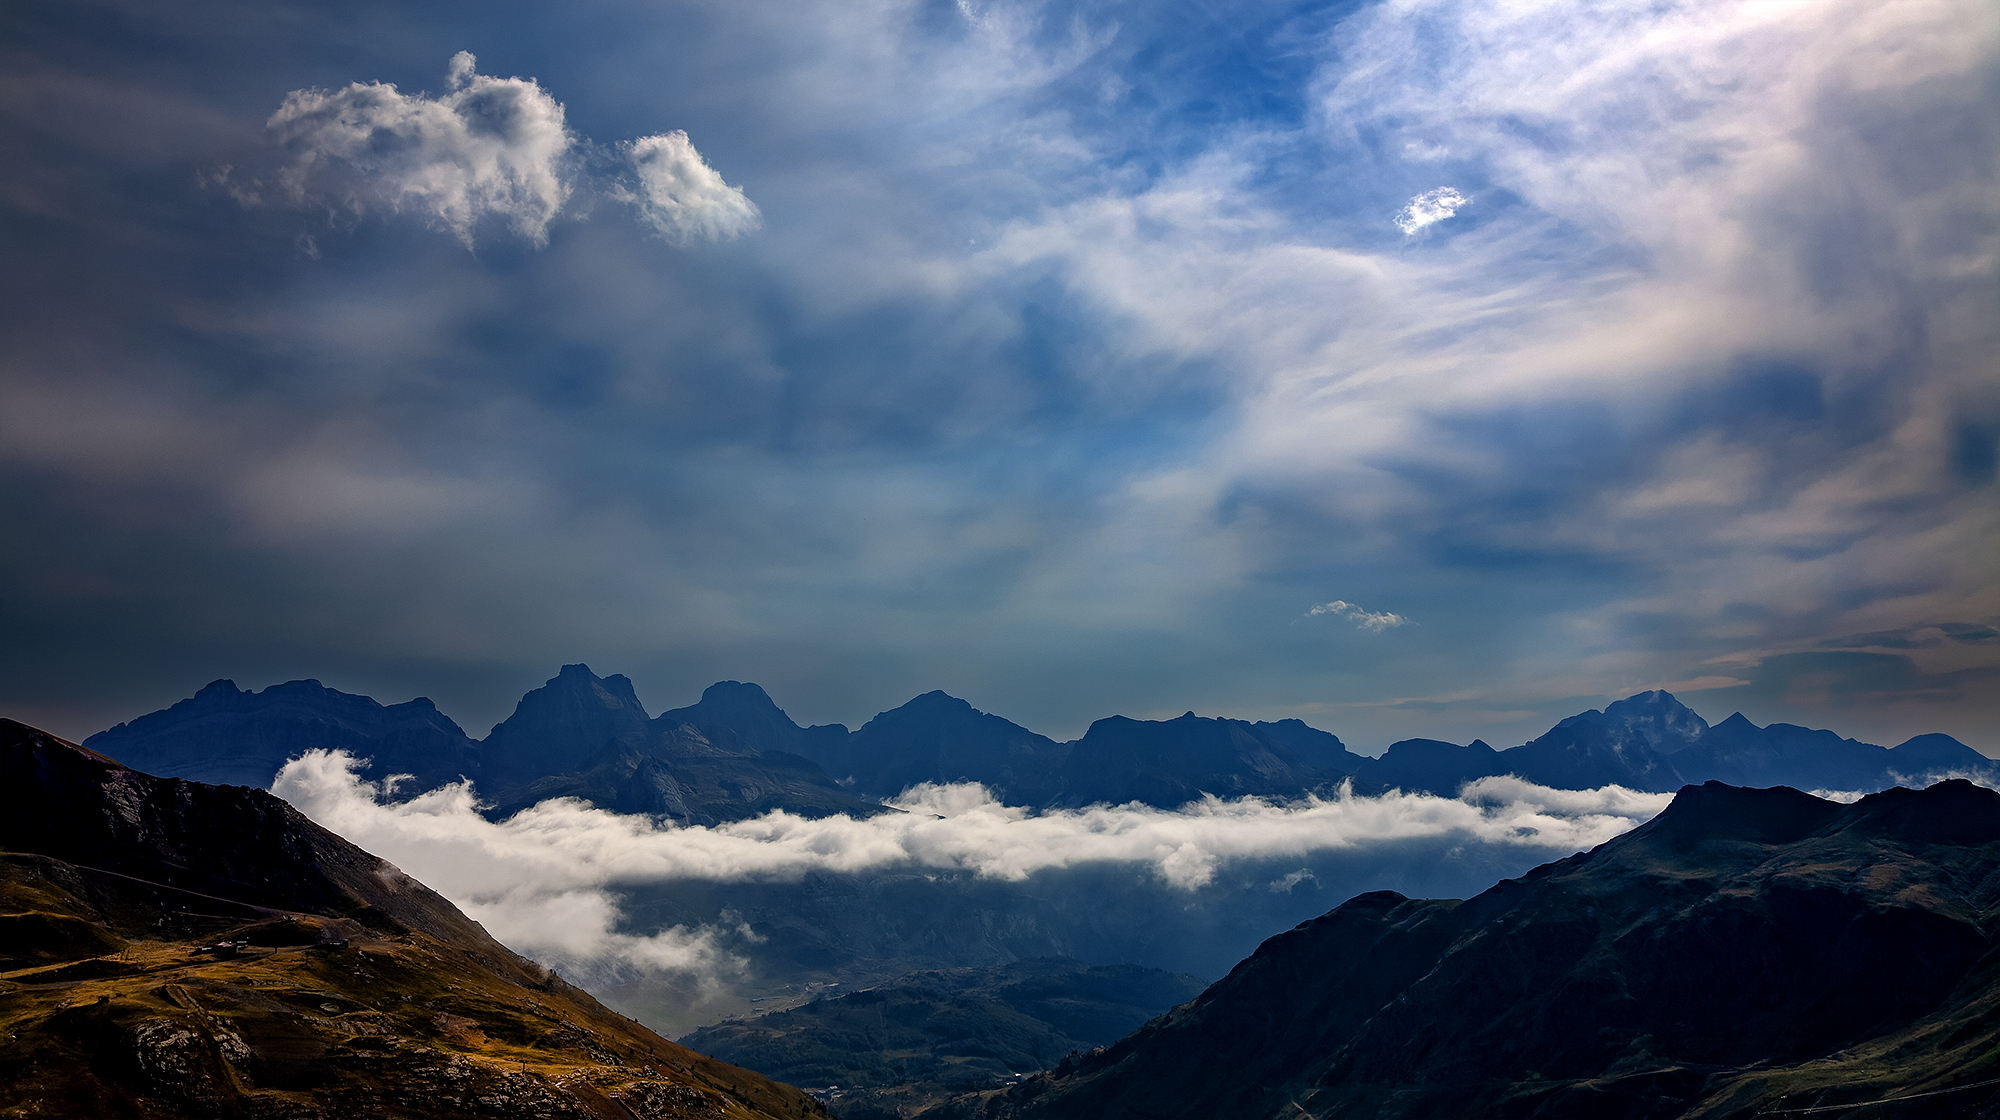 Paisajes, naturaleza, fotografía de paisajes, fotografía de naturaleza, Pirineos, montañas, cielo tormentoso, nubes